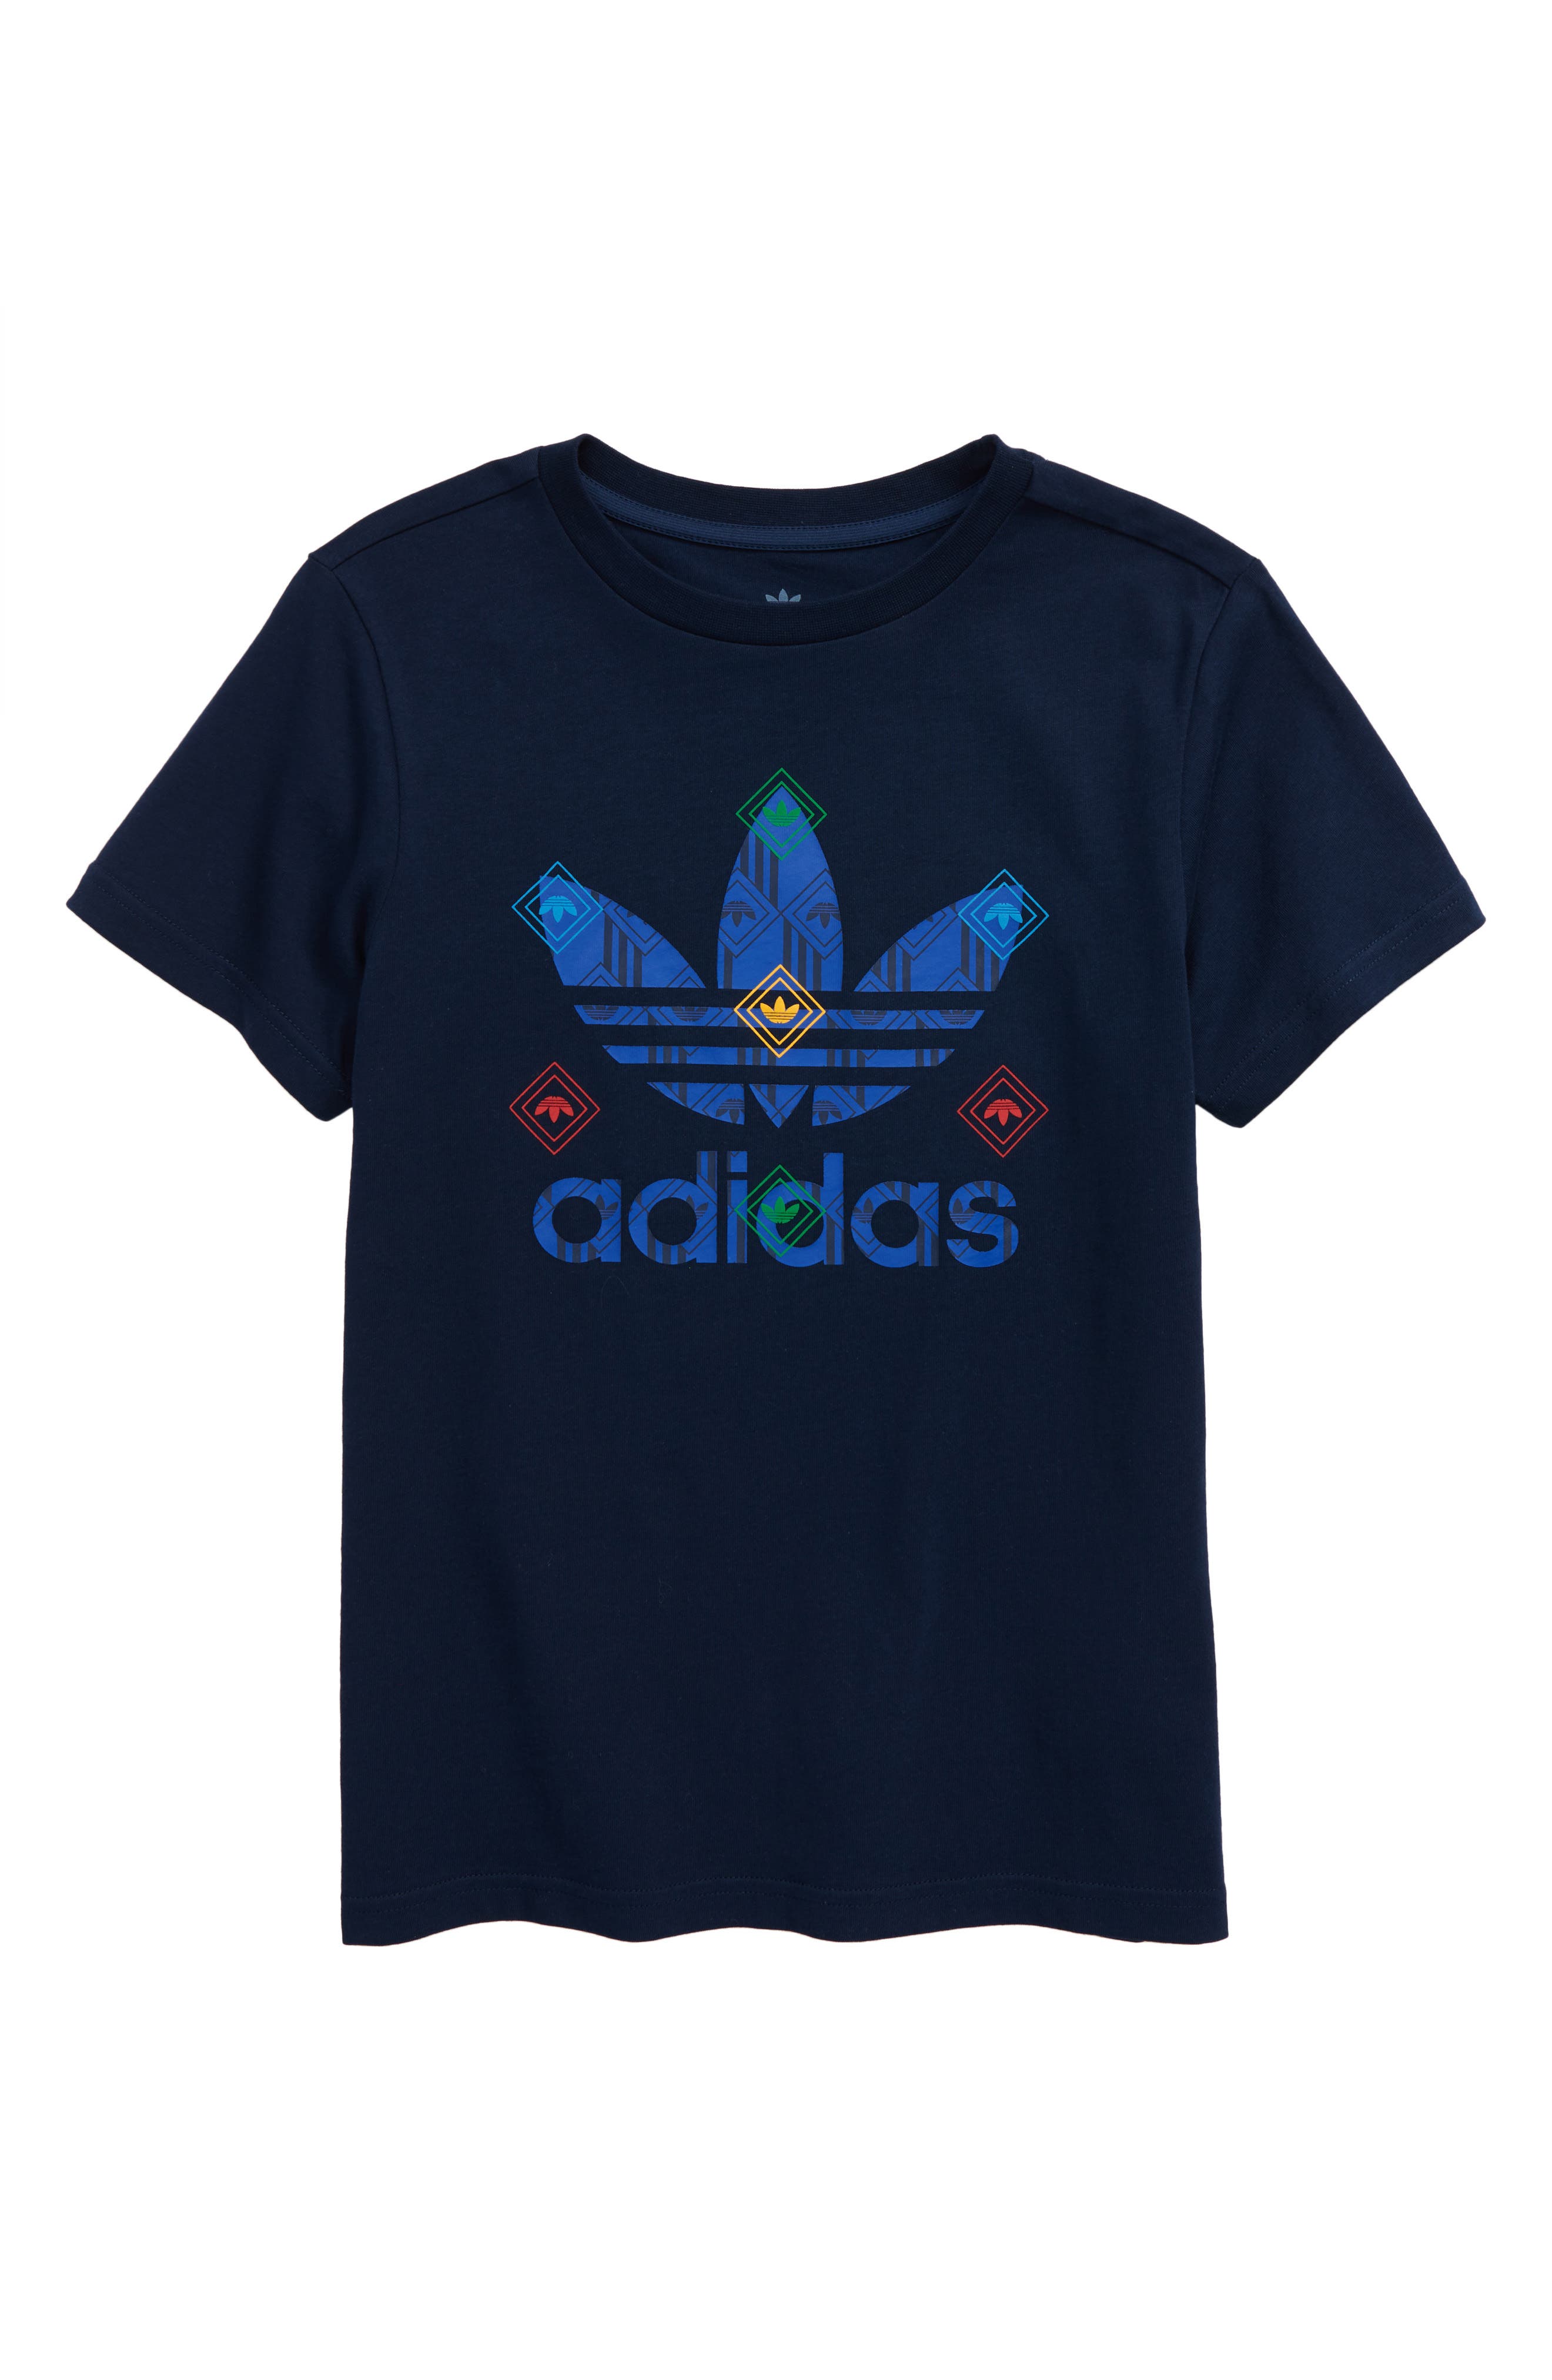 adidas shirts for boys